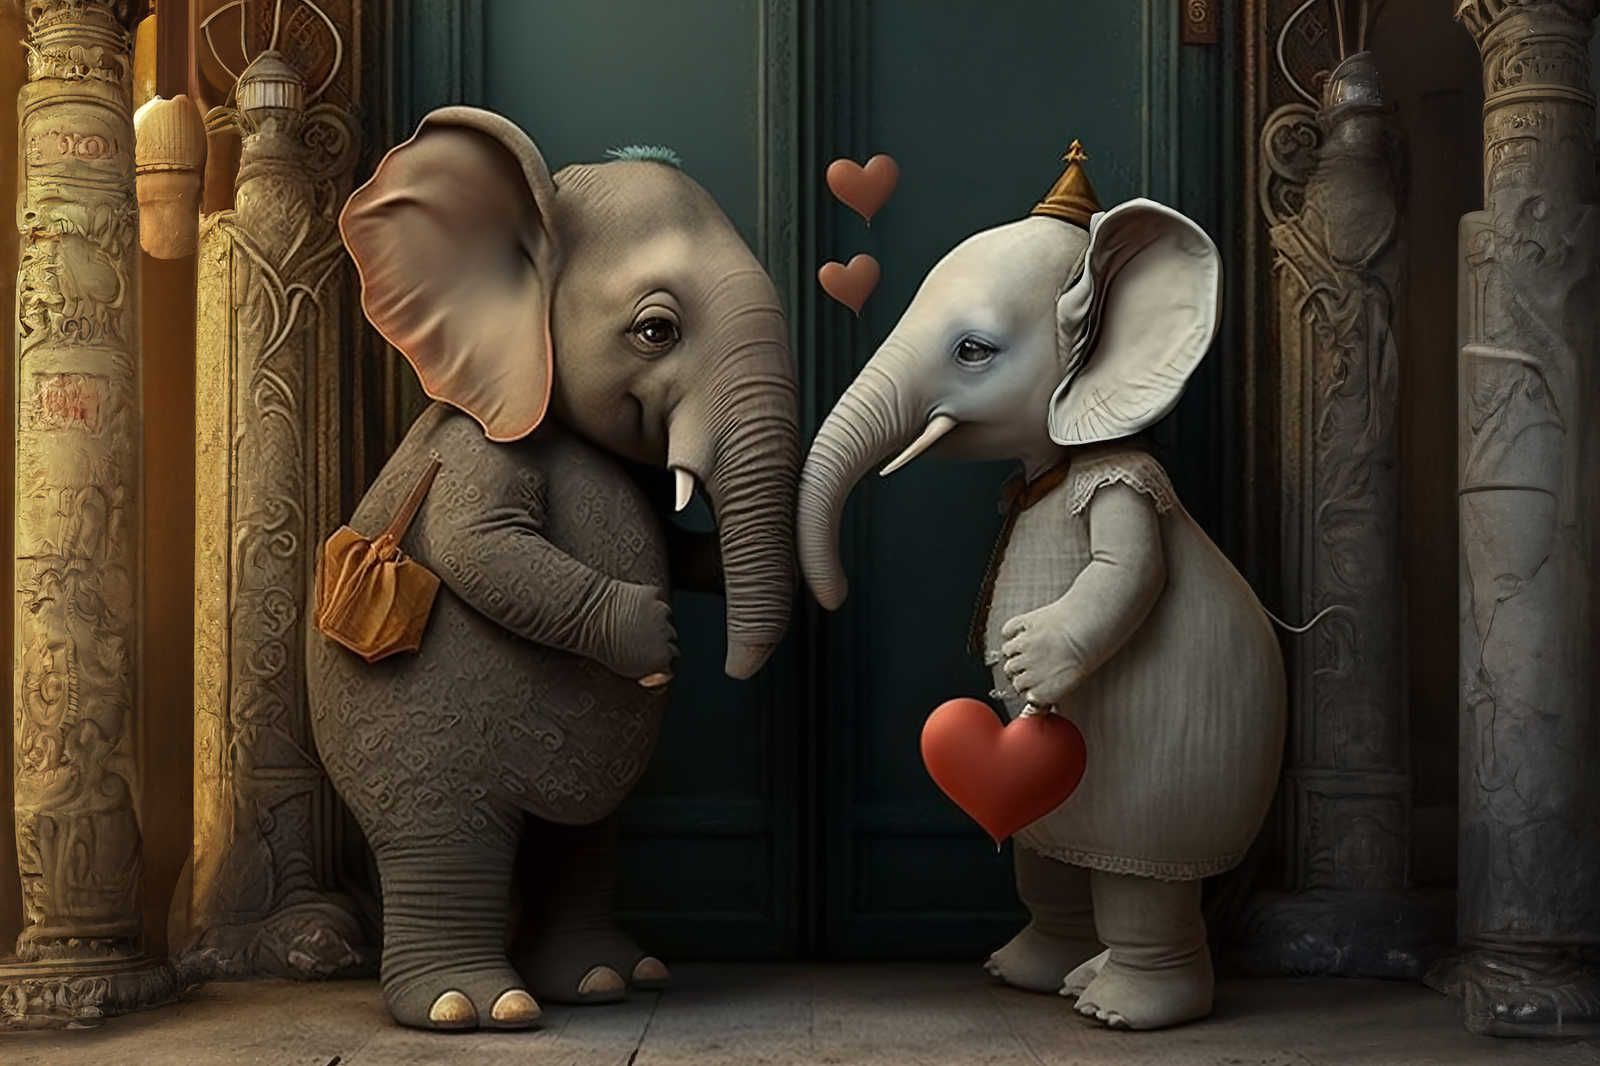             KI canvas schilderij »elephant love« - 90 cm x 60 cm
        